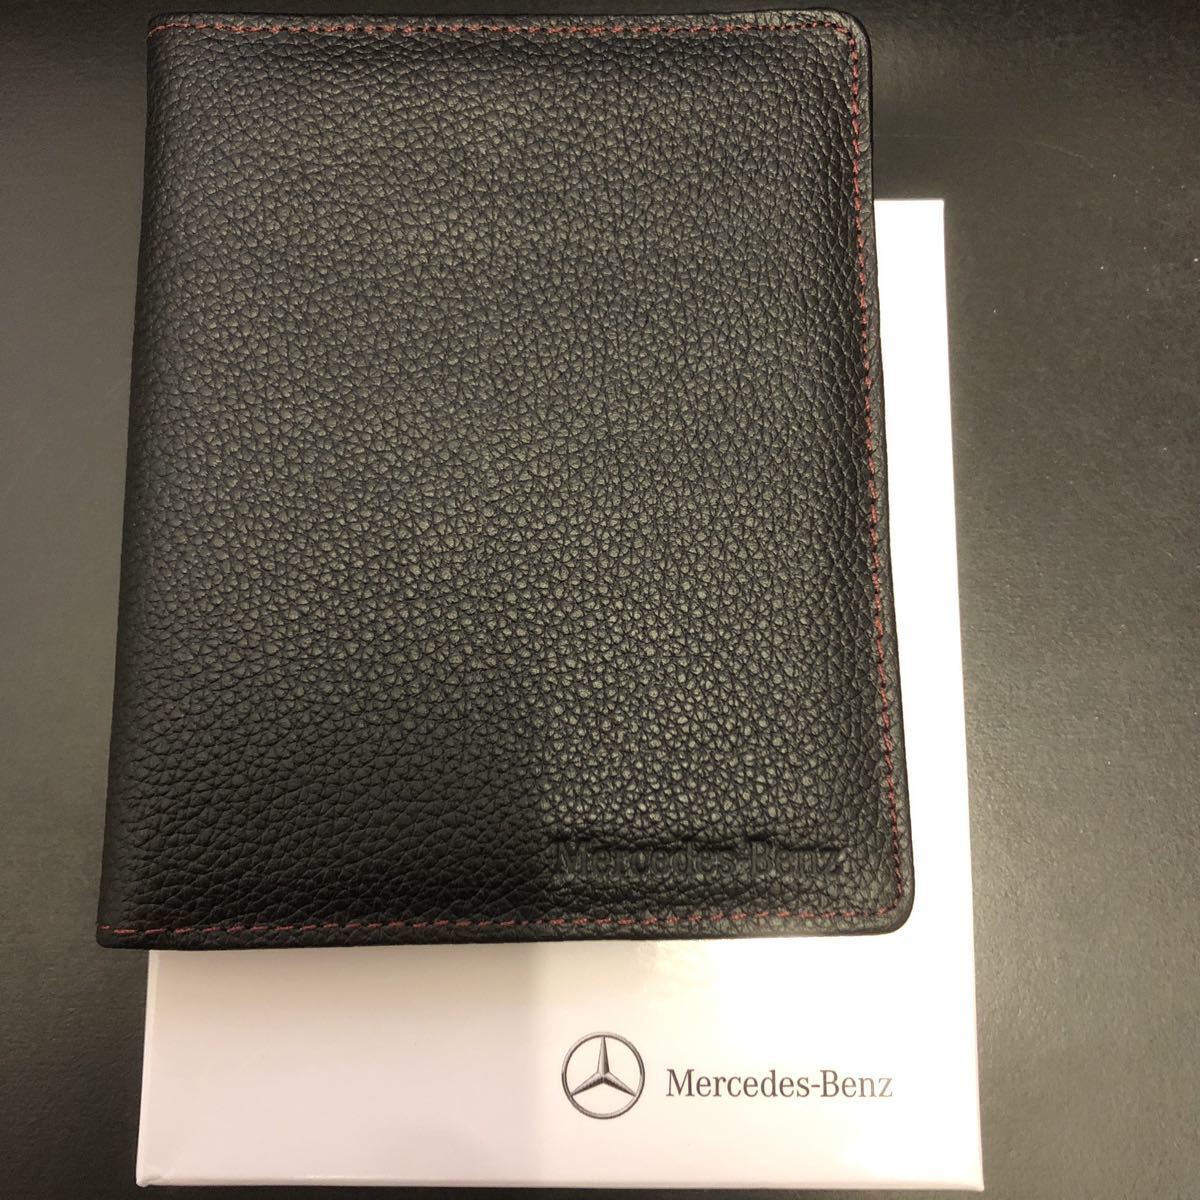 Mercedes-Benz Passport case Black Leather Cowhide Novelty New